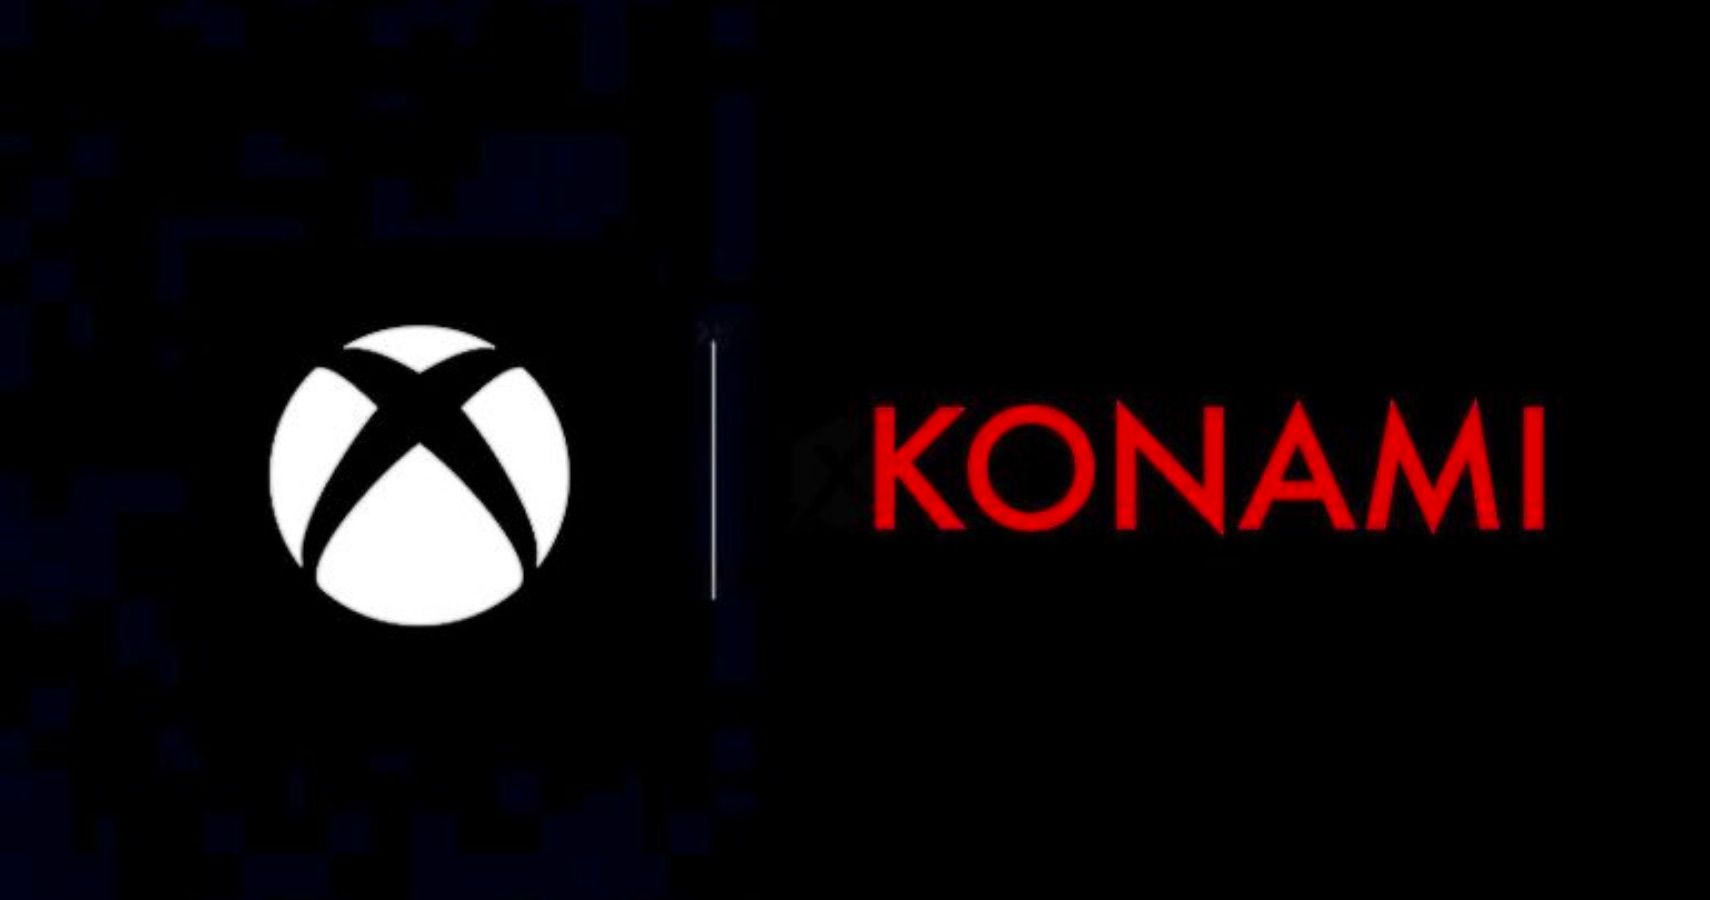 Konami údajně prodalo práva na své značky nikoliv Sony, ale Microsoftu